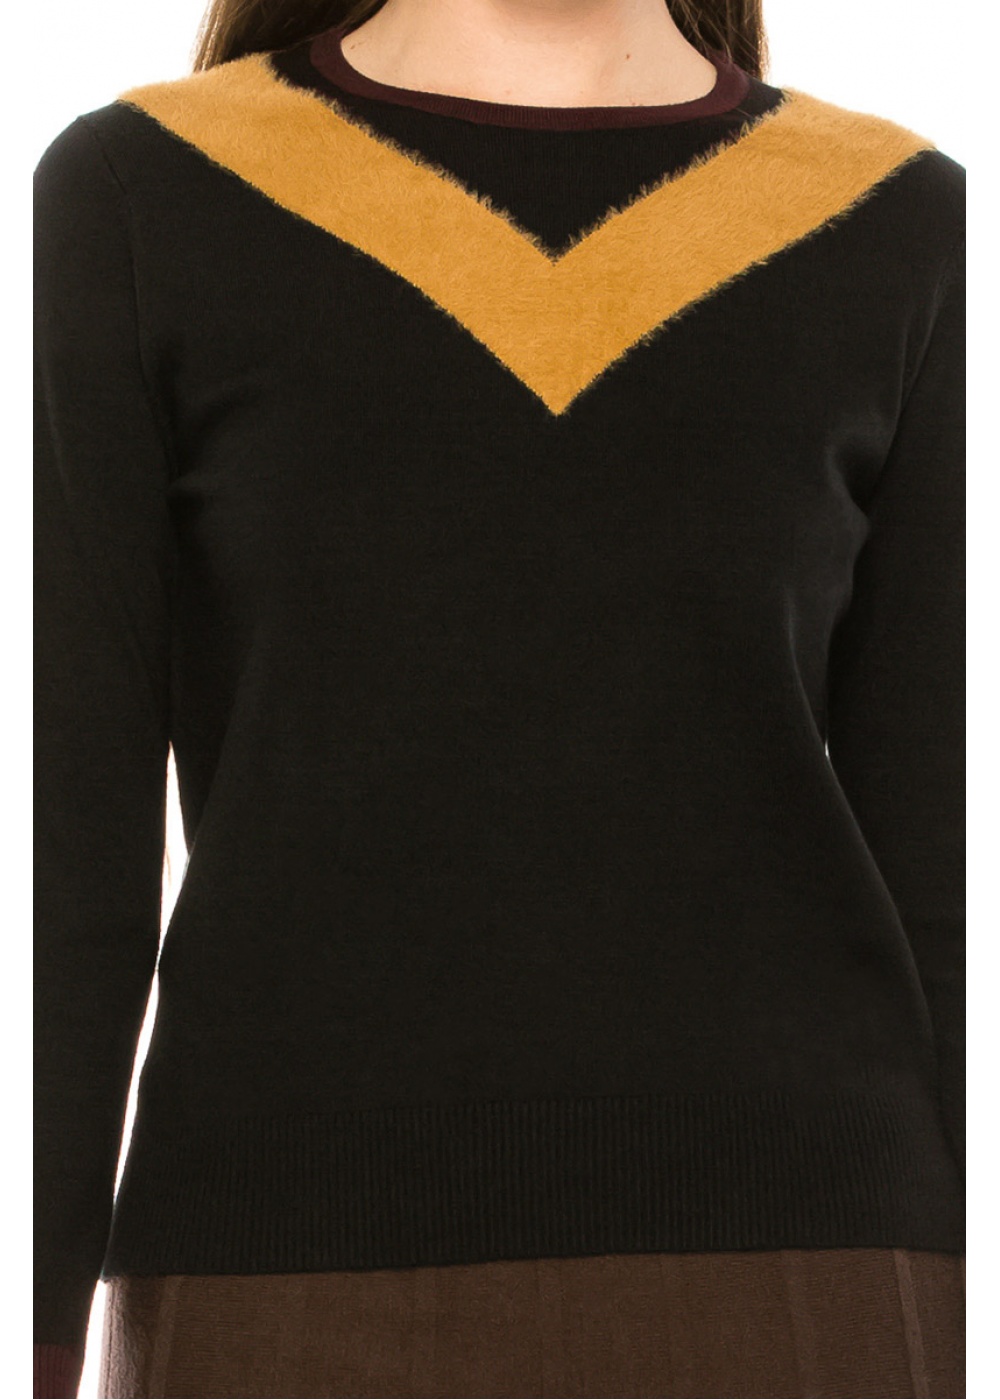 The "V-Neck" Sweater